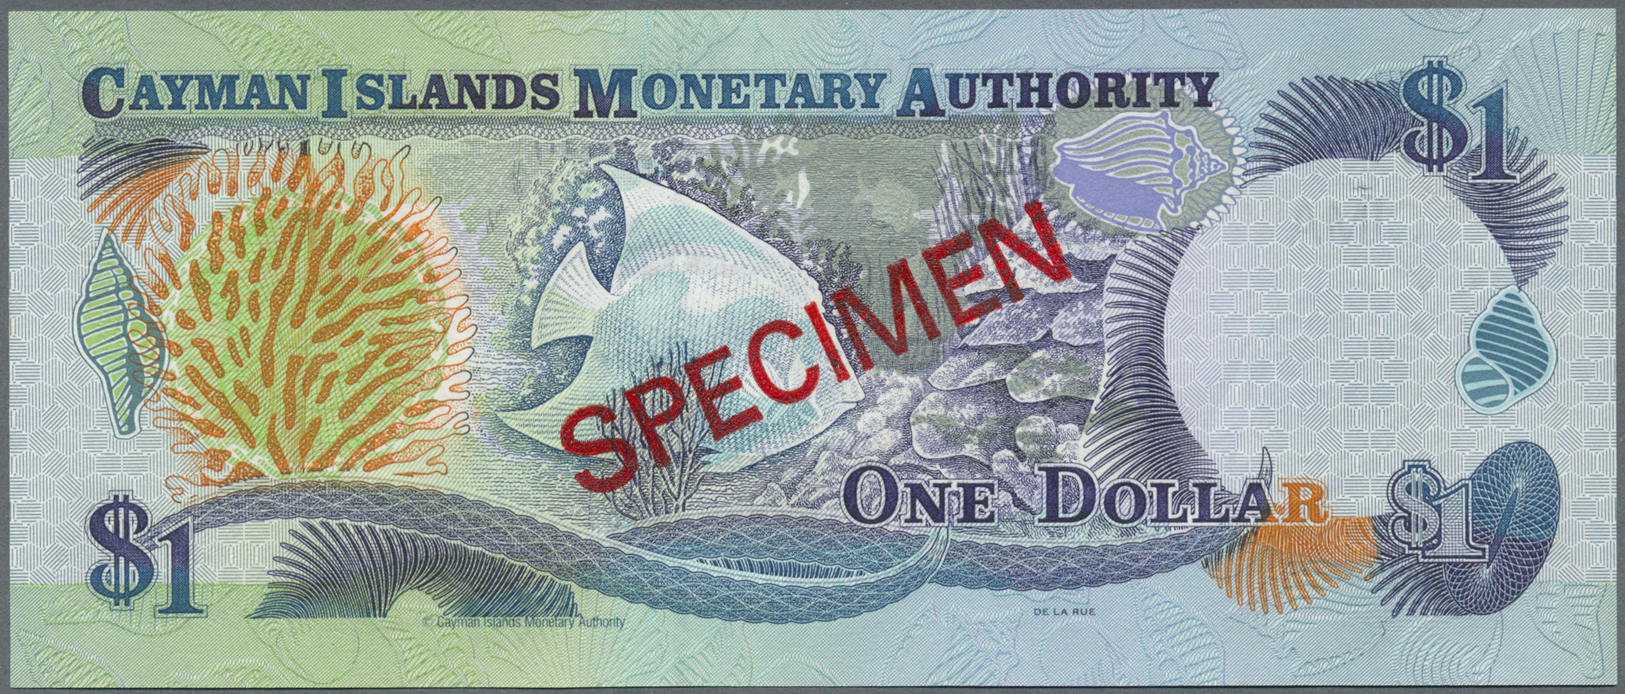 00518 Cayman Islands: 1 Dollar 2003 Commorative Issue SPECIMEN P. 30s, Rare As Specimen, Condition: UNC. - Cayman Islands